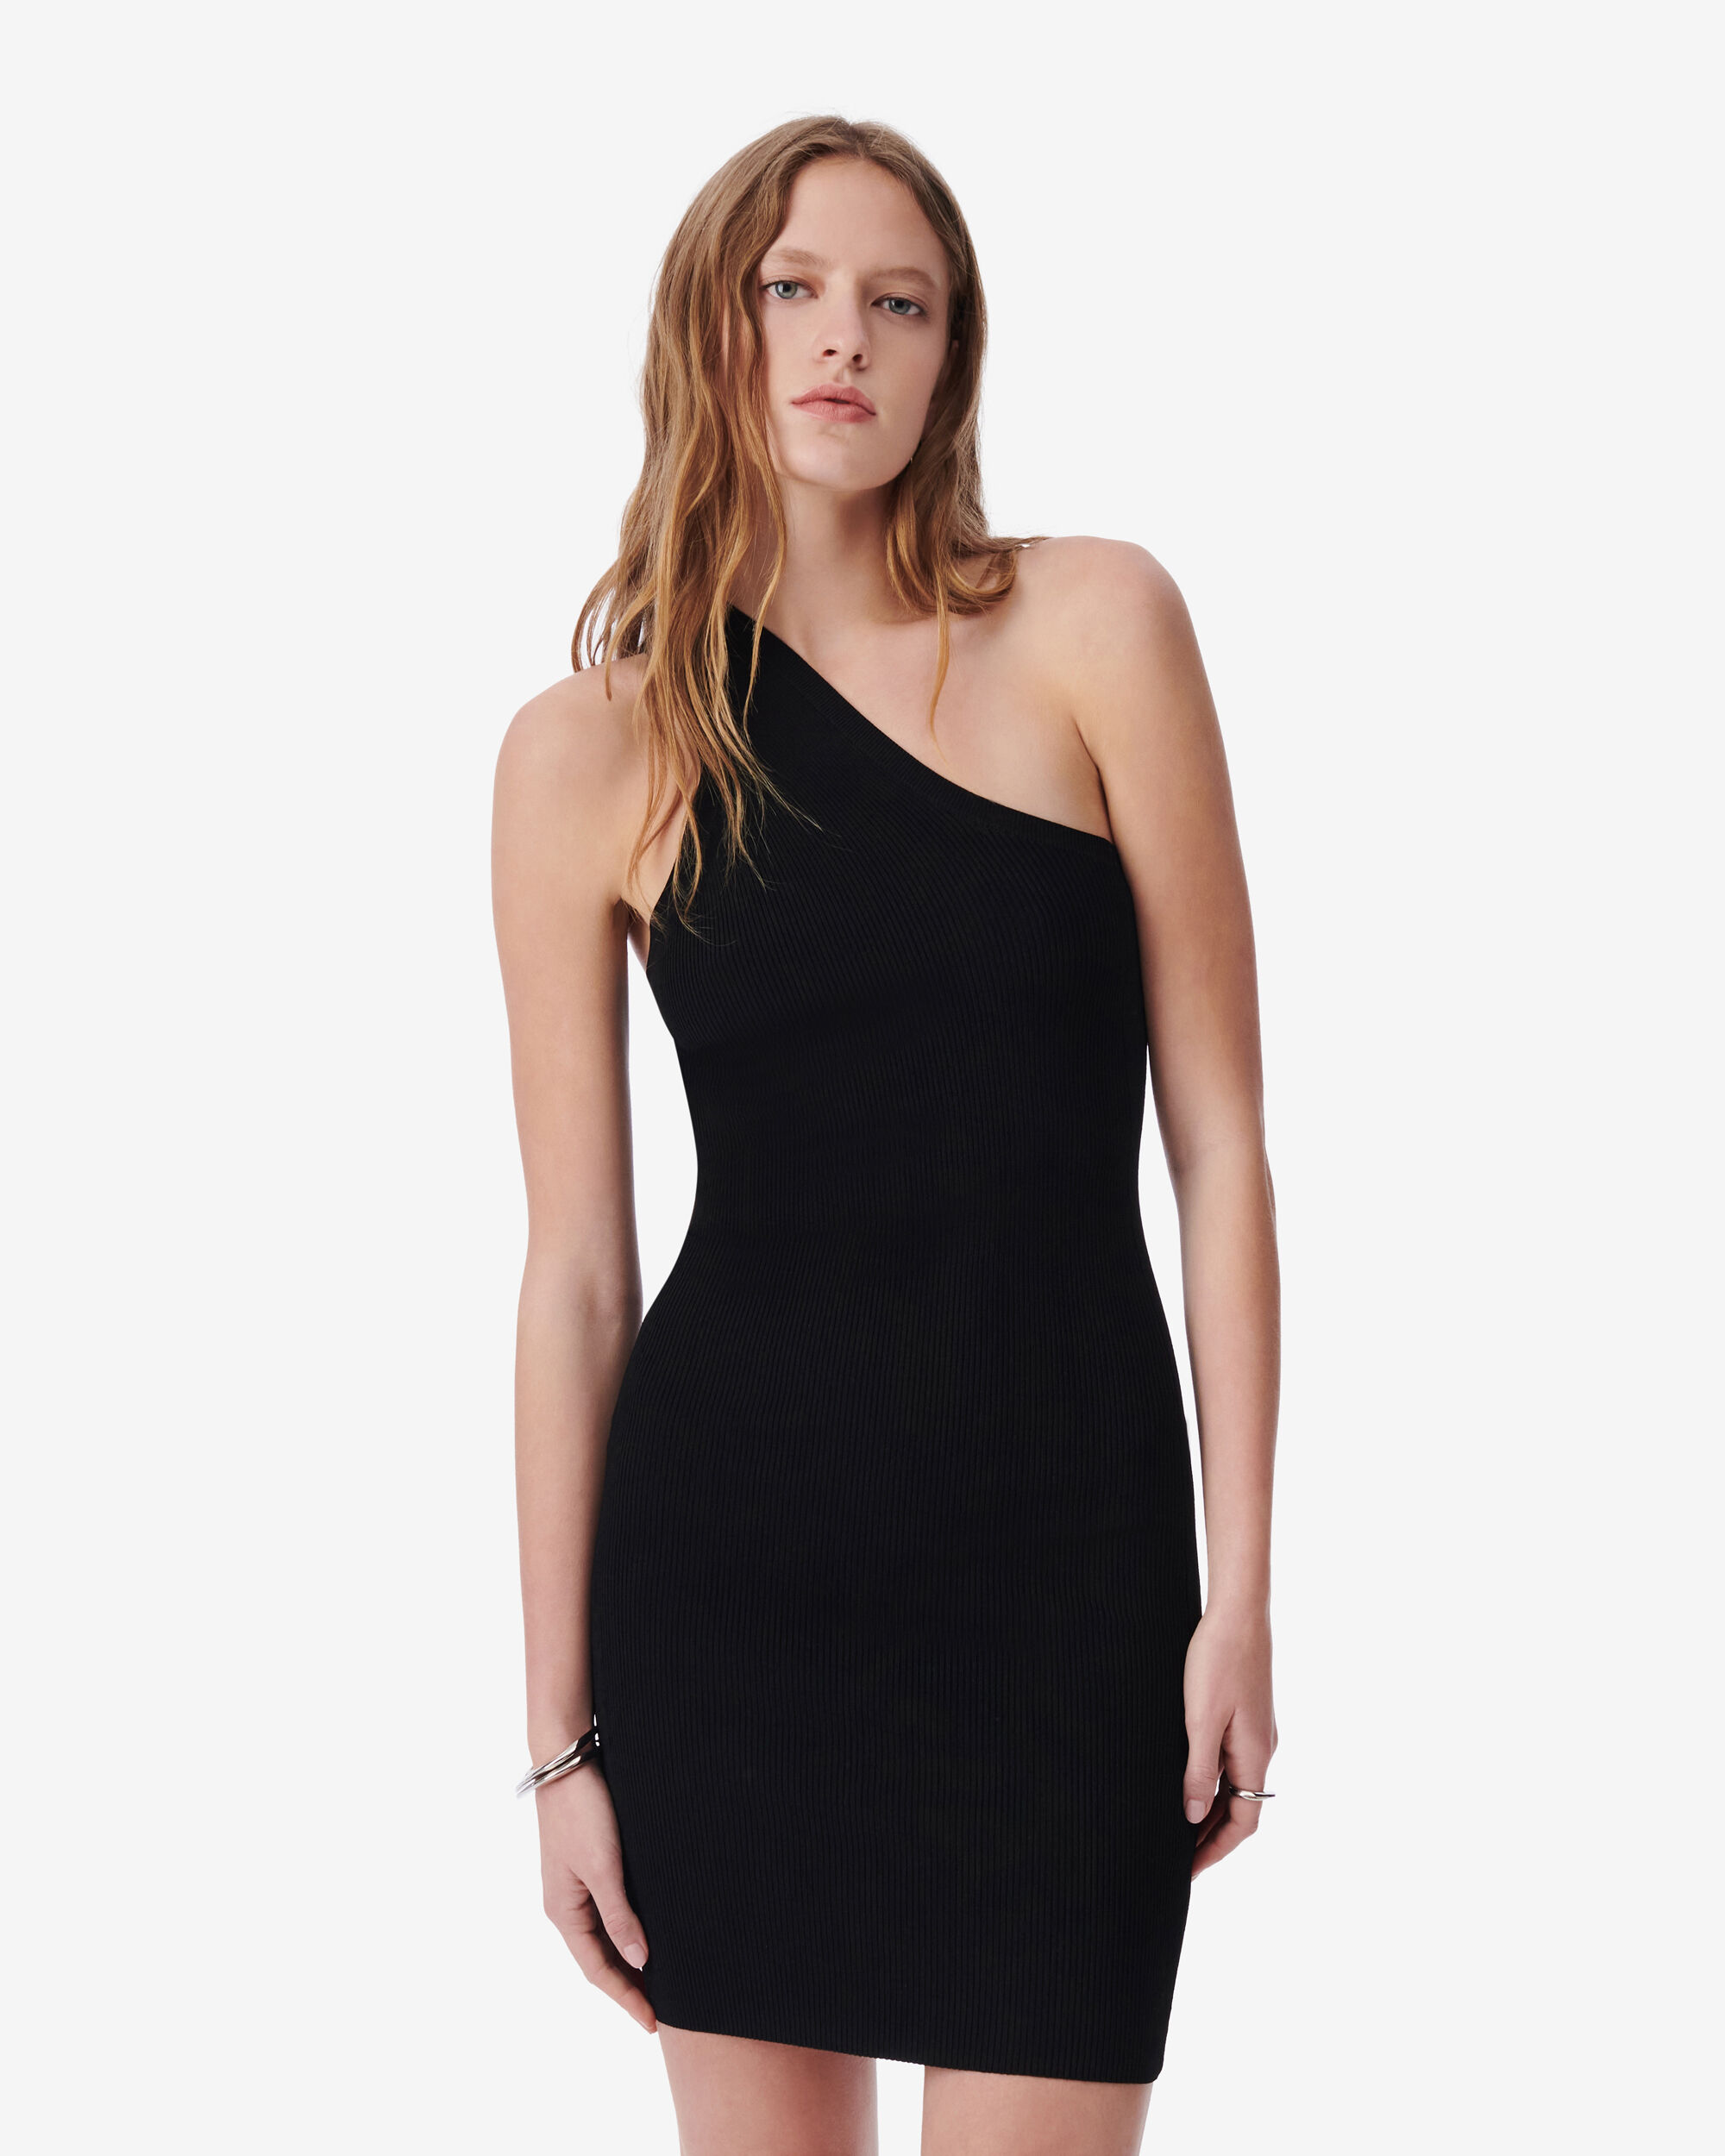 Women's dresses - IRO | Official online store